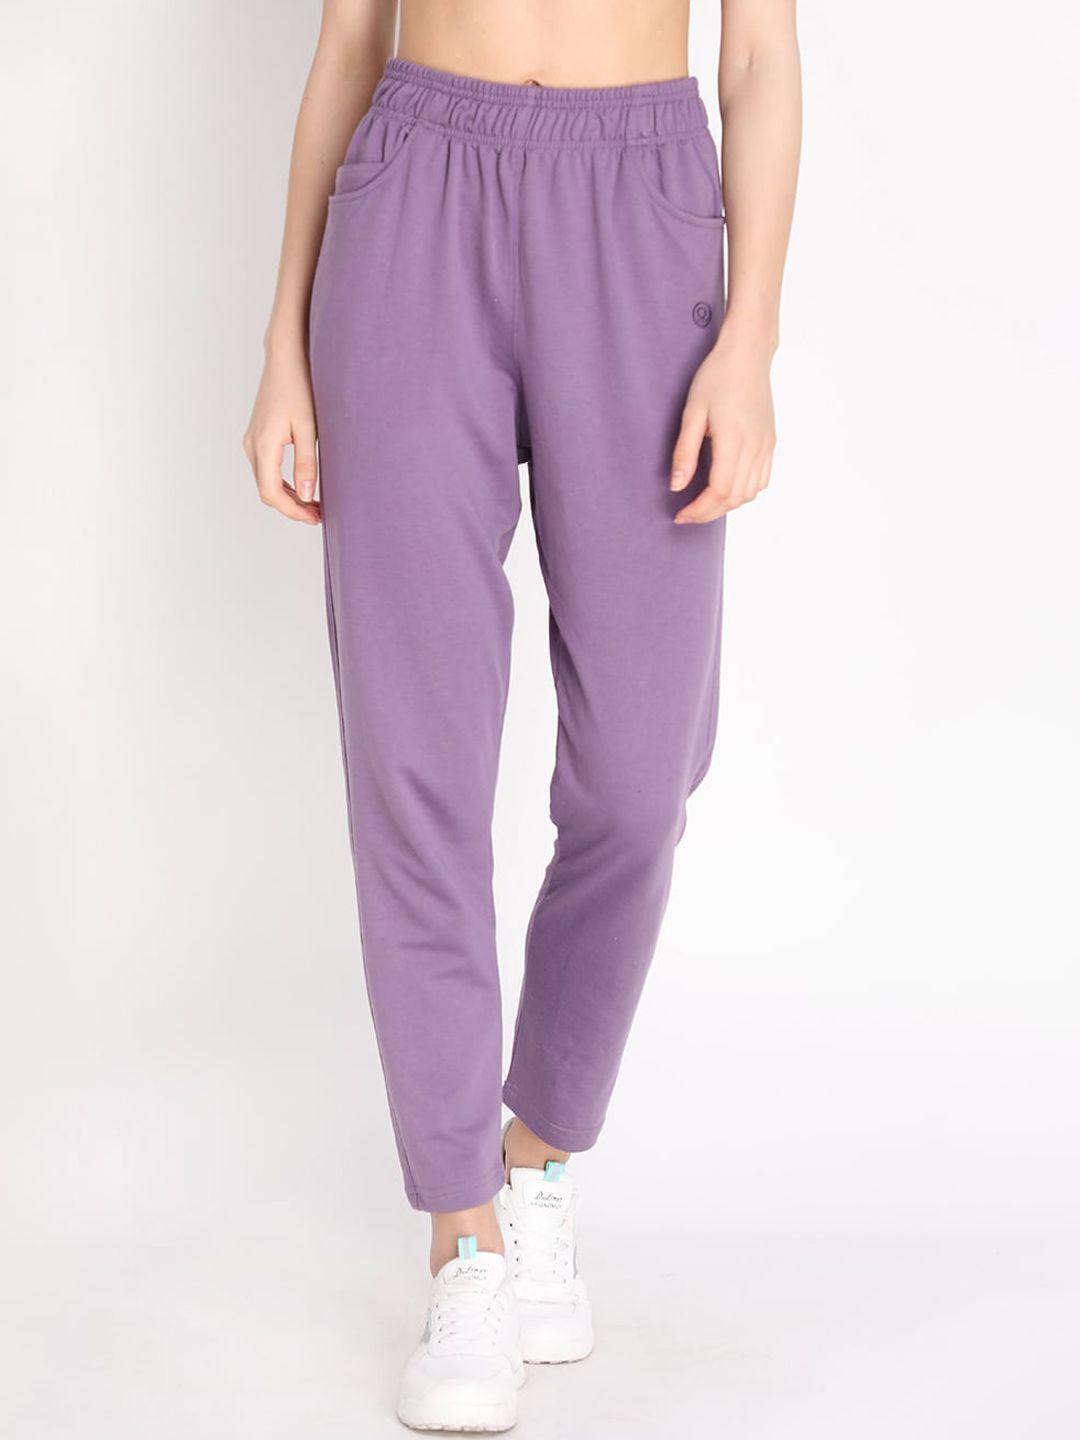 chkokko-women-purple-solid-cotton-track-pants